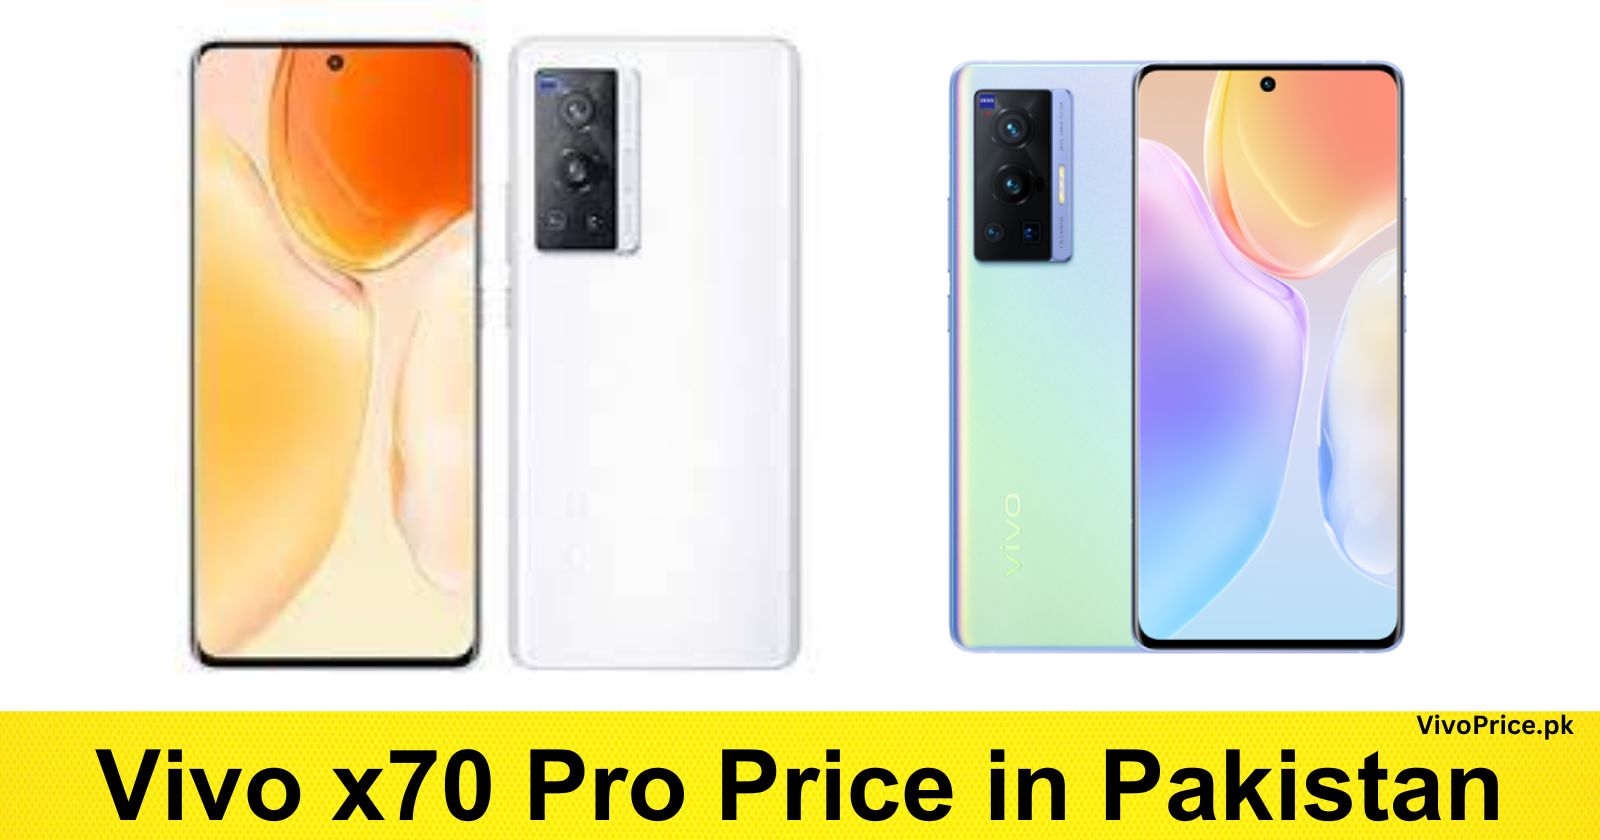 Vivo x70 Pro Price in Pakistan | VivoPrice.pk